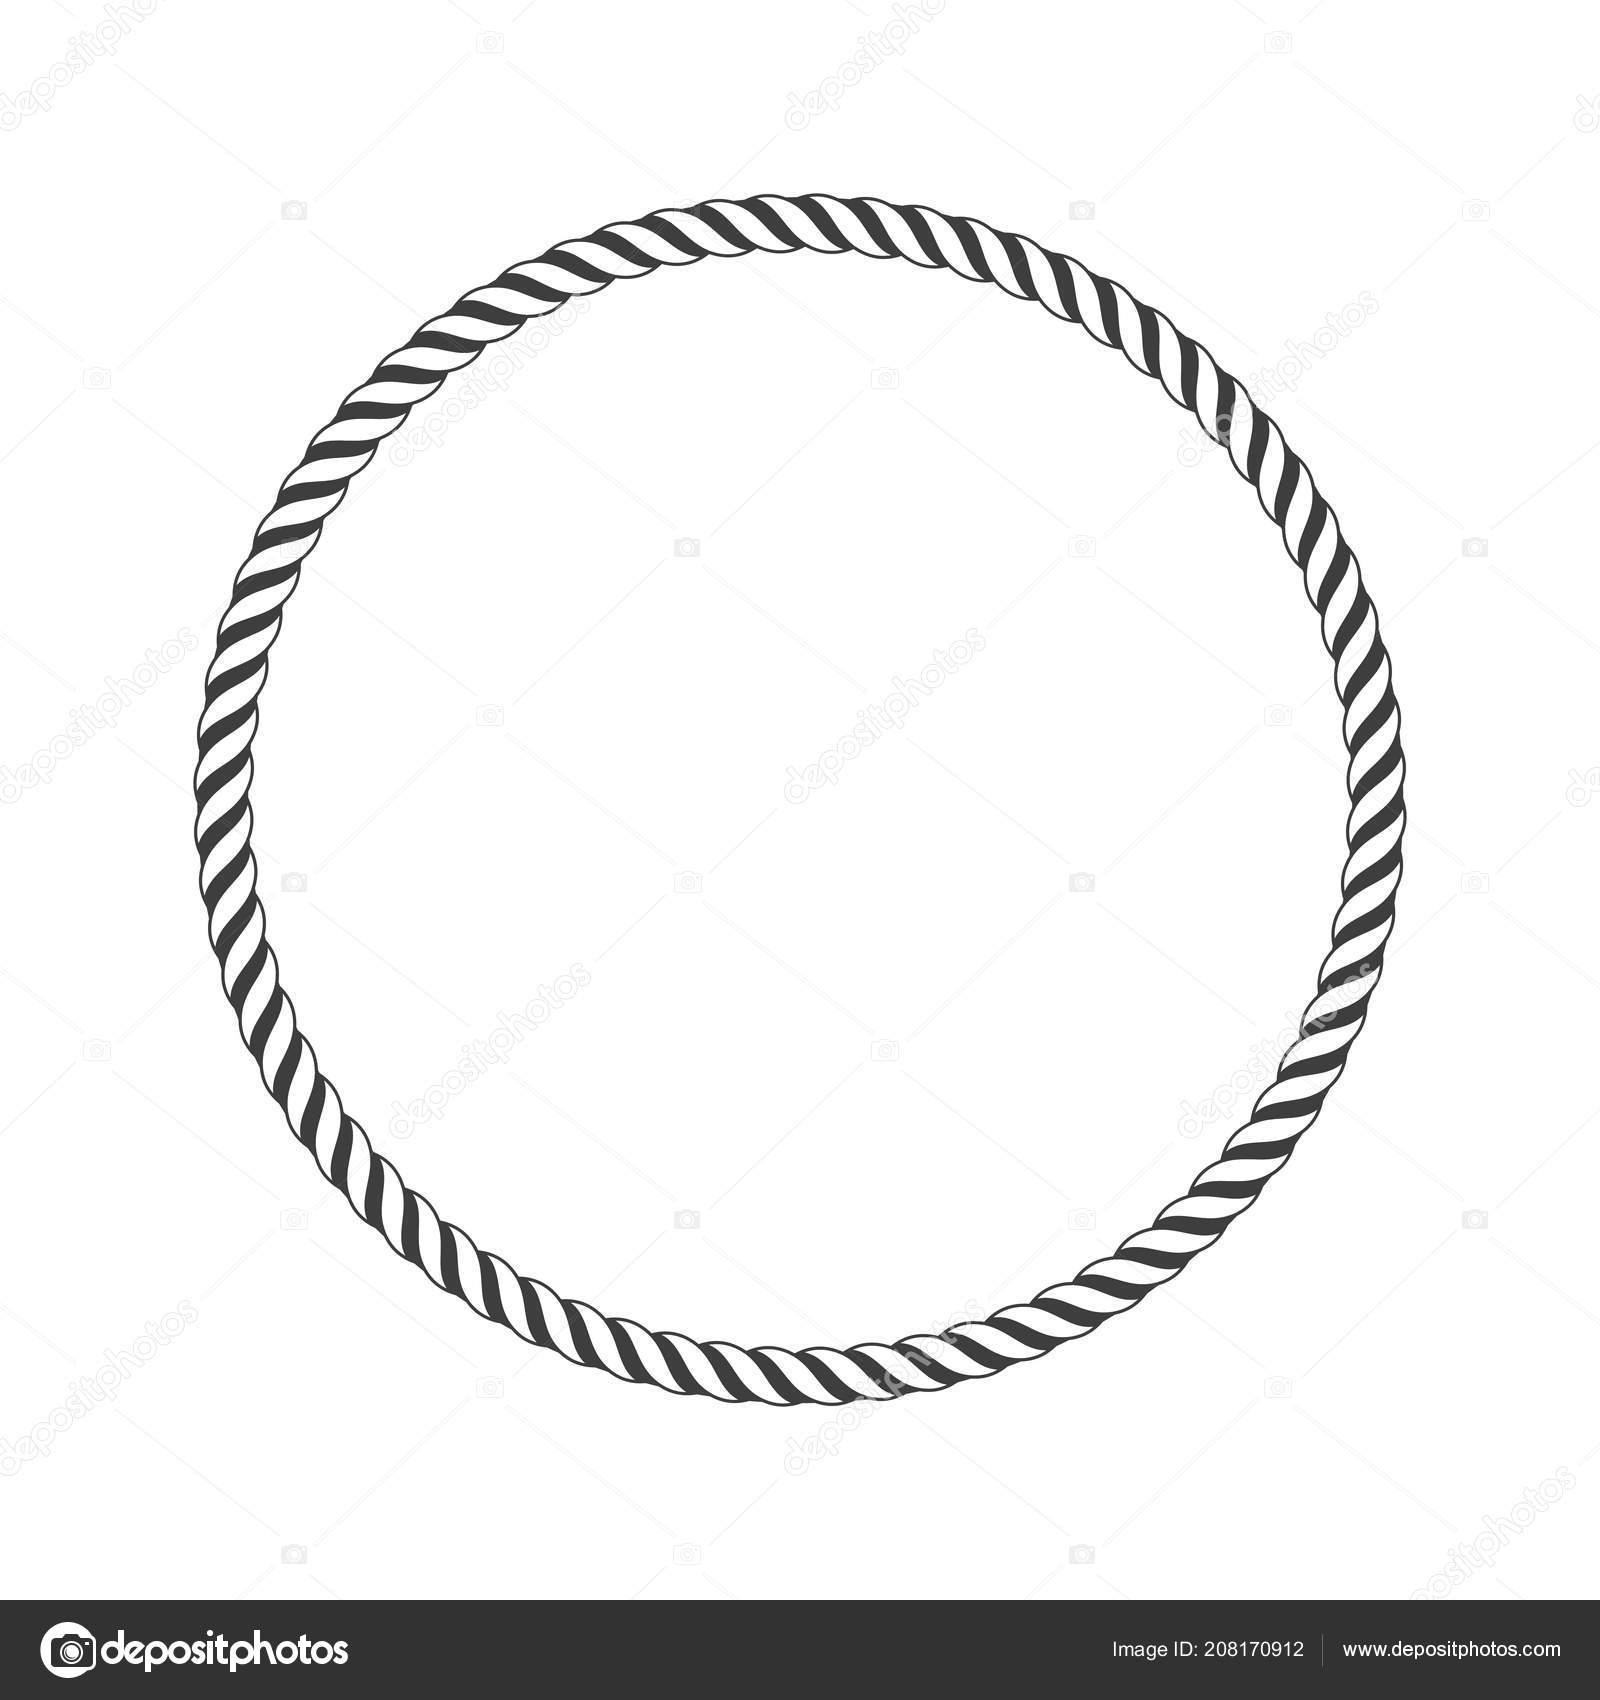 Round marine rope. Stock Vector by ©art-sonik 208170912